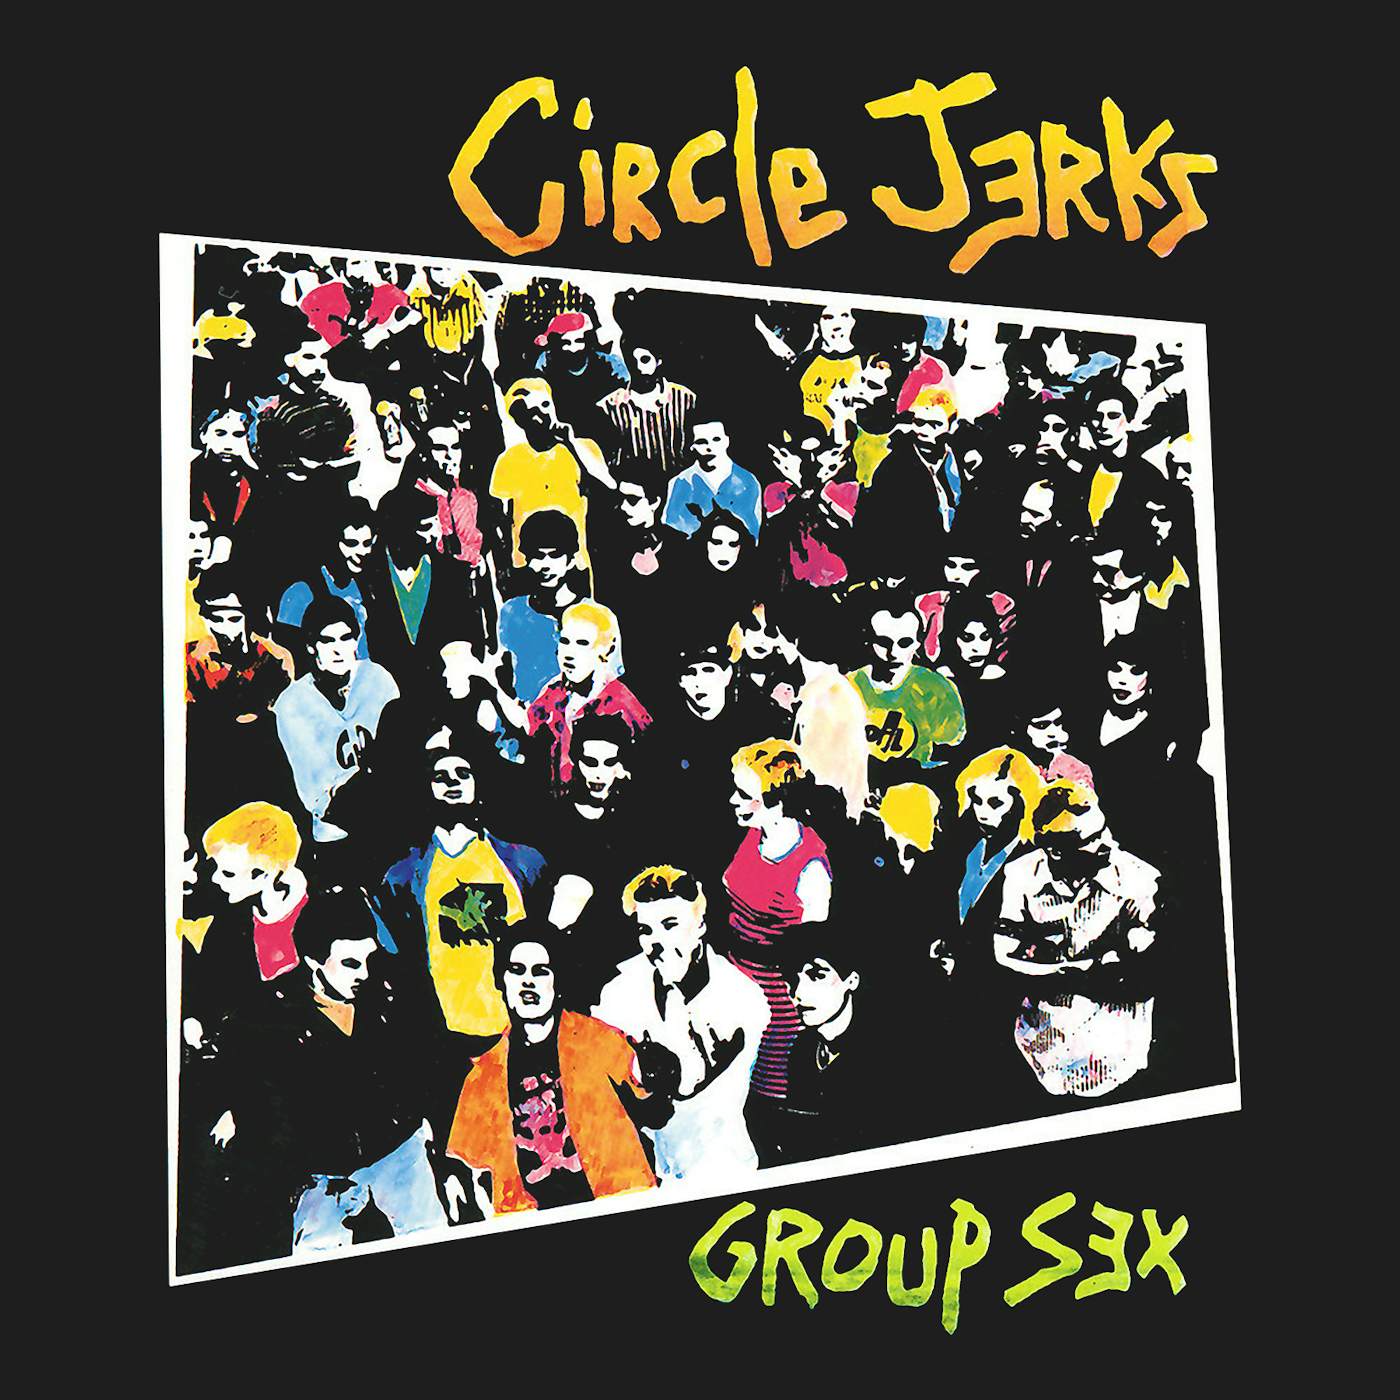 Circle Jerks T-Shirt | Group Sex Album Art Circle Jerks Shirt